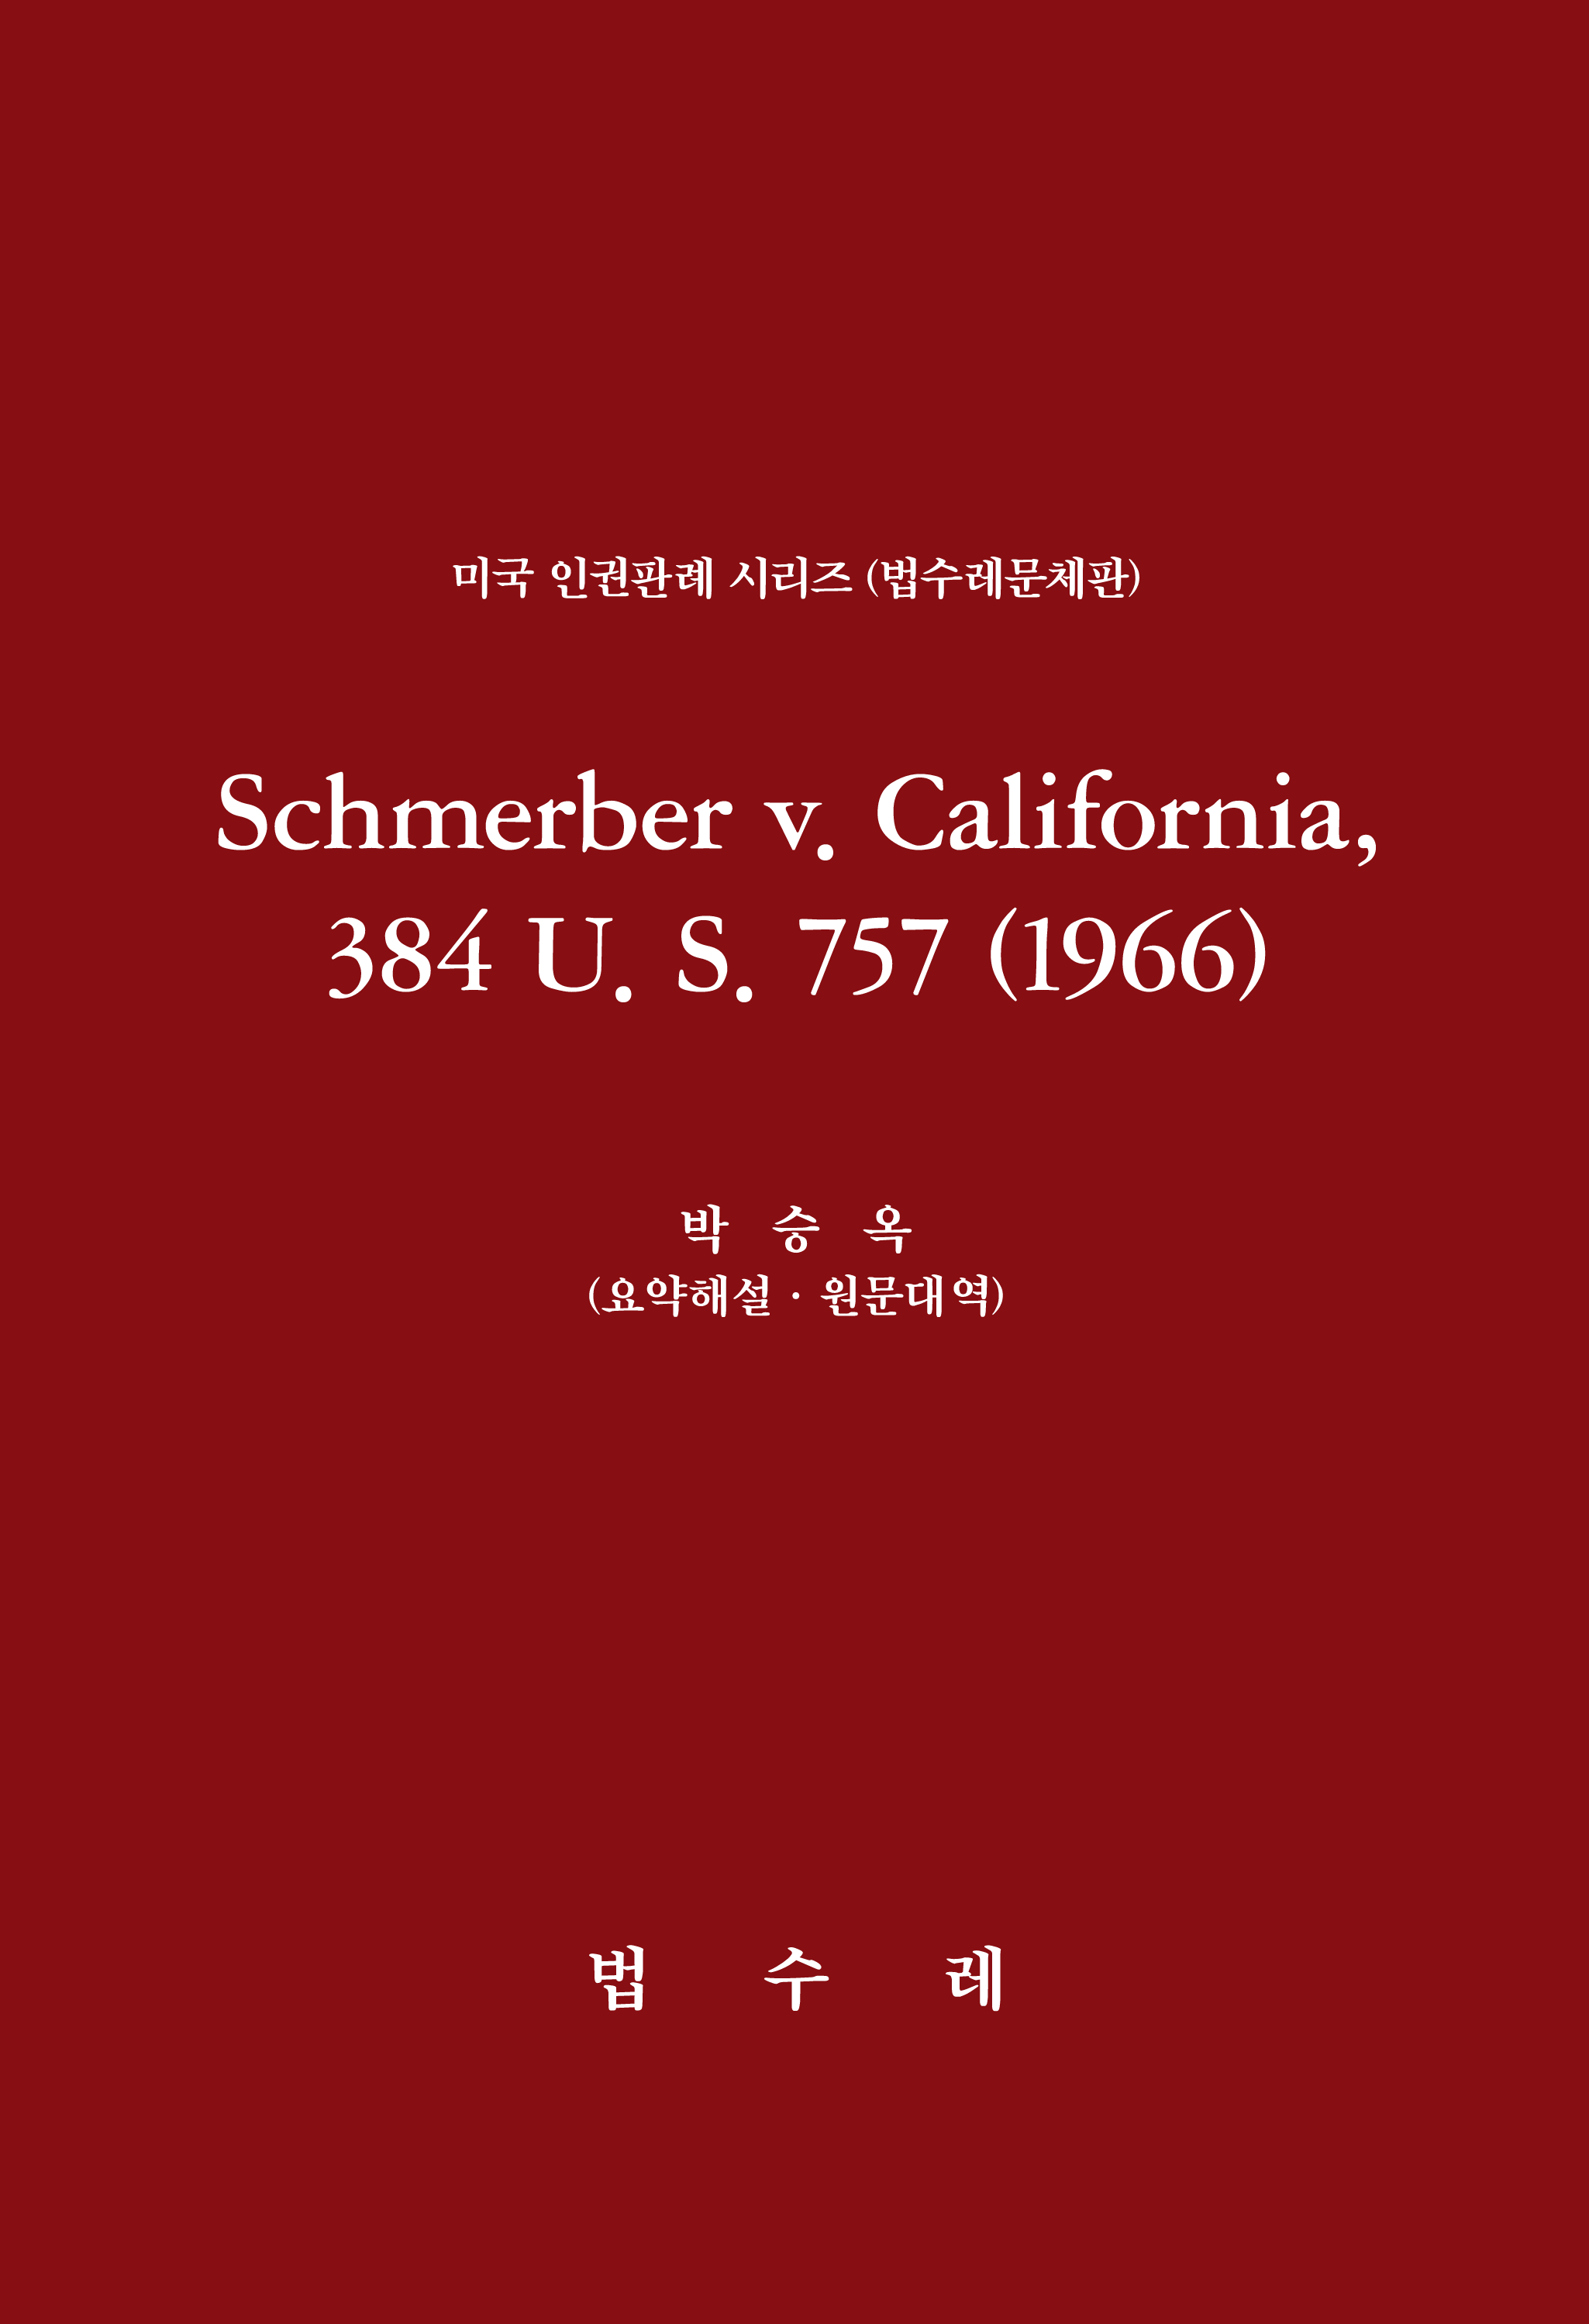 Schmerber v. California, 384 U. S. 757 (1966)